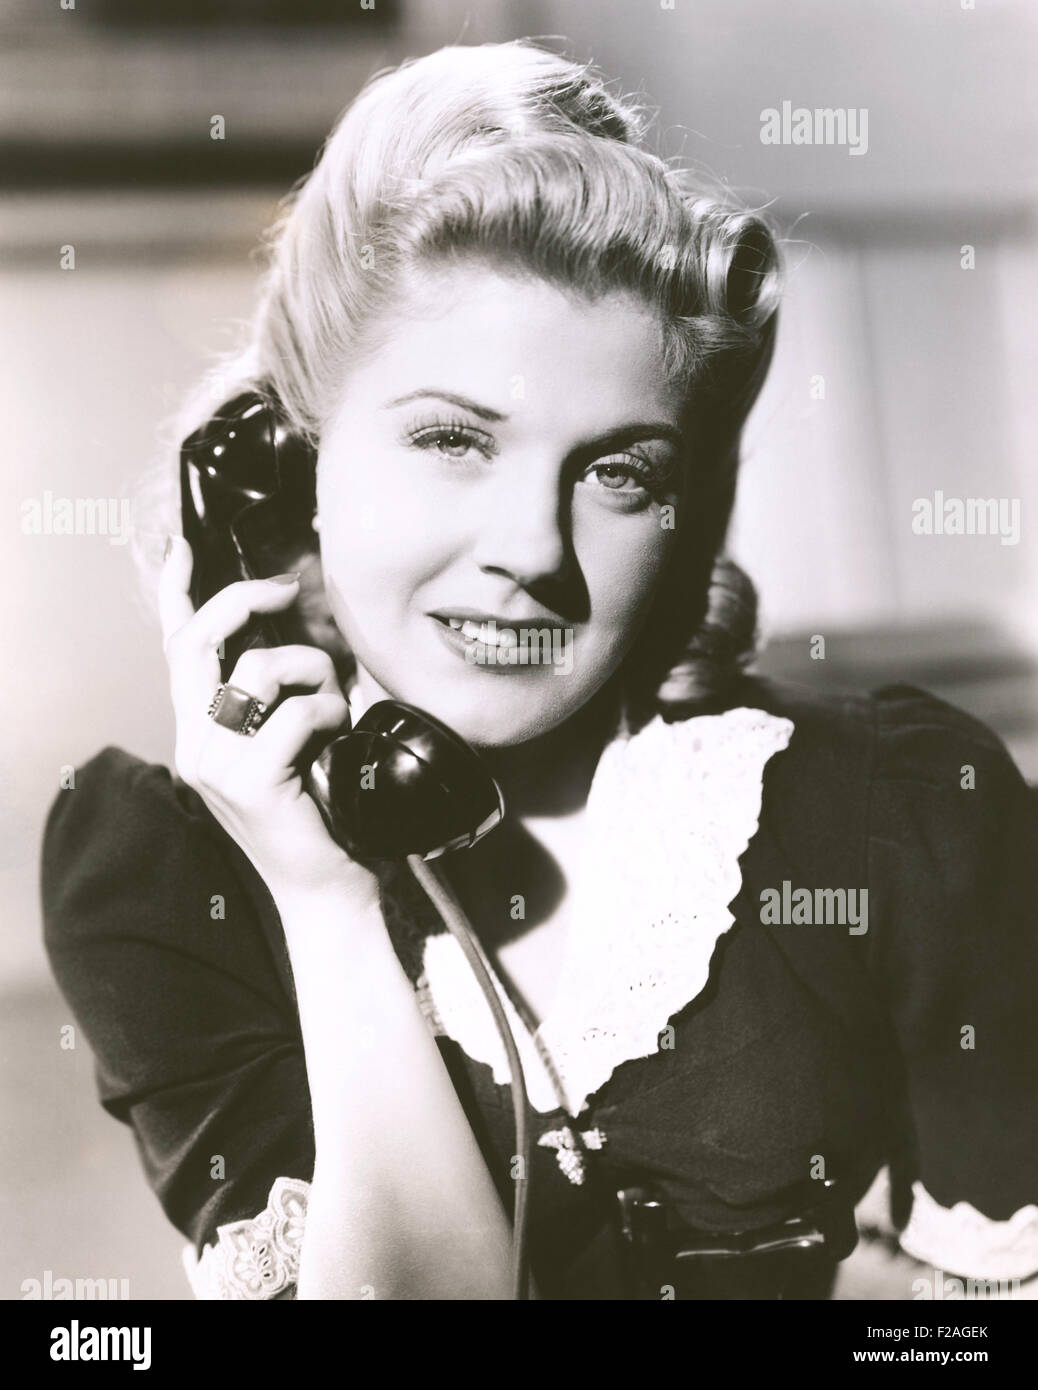 Blonde woman holding telephone receiver (OLVI008 OU144 F) Stock Photo